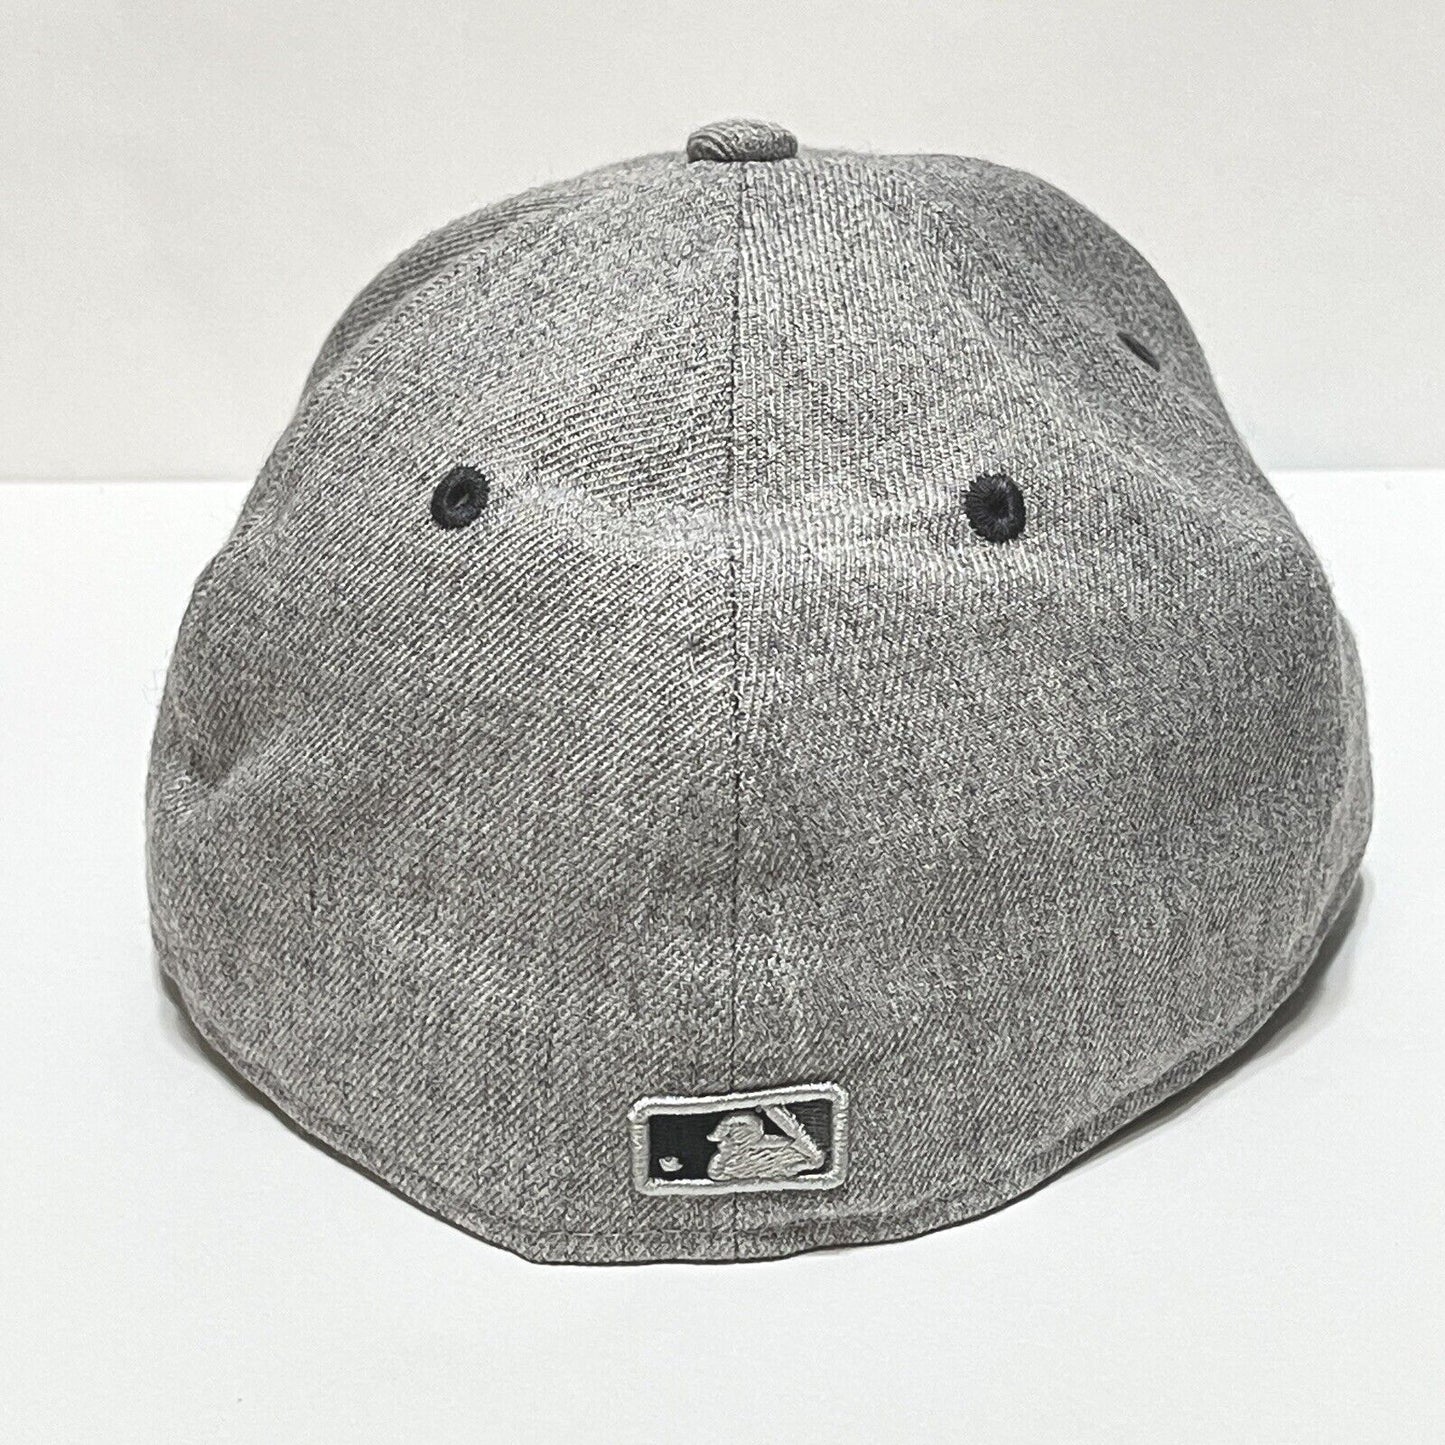 New Era 59fifty Colorado Rockies￼ MLB Baseball Hat Rubber Logo Size 7-1/4 Cap